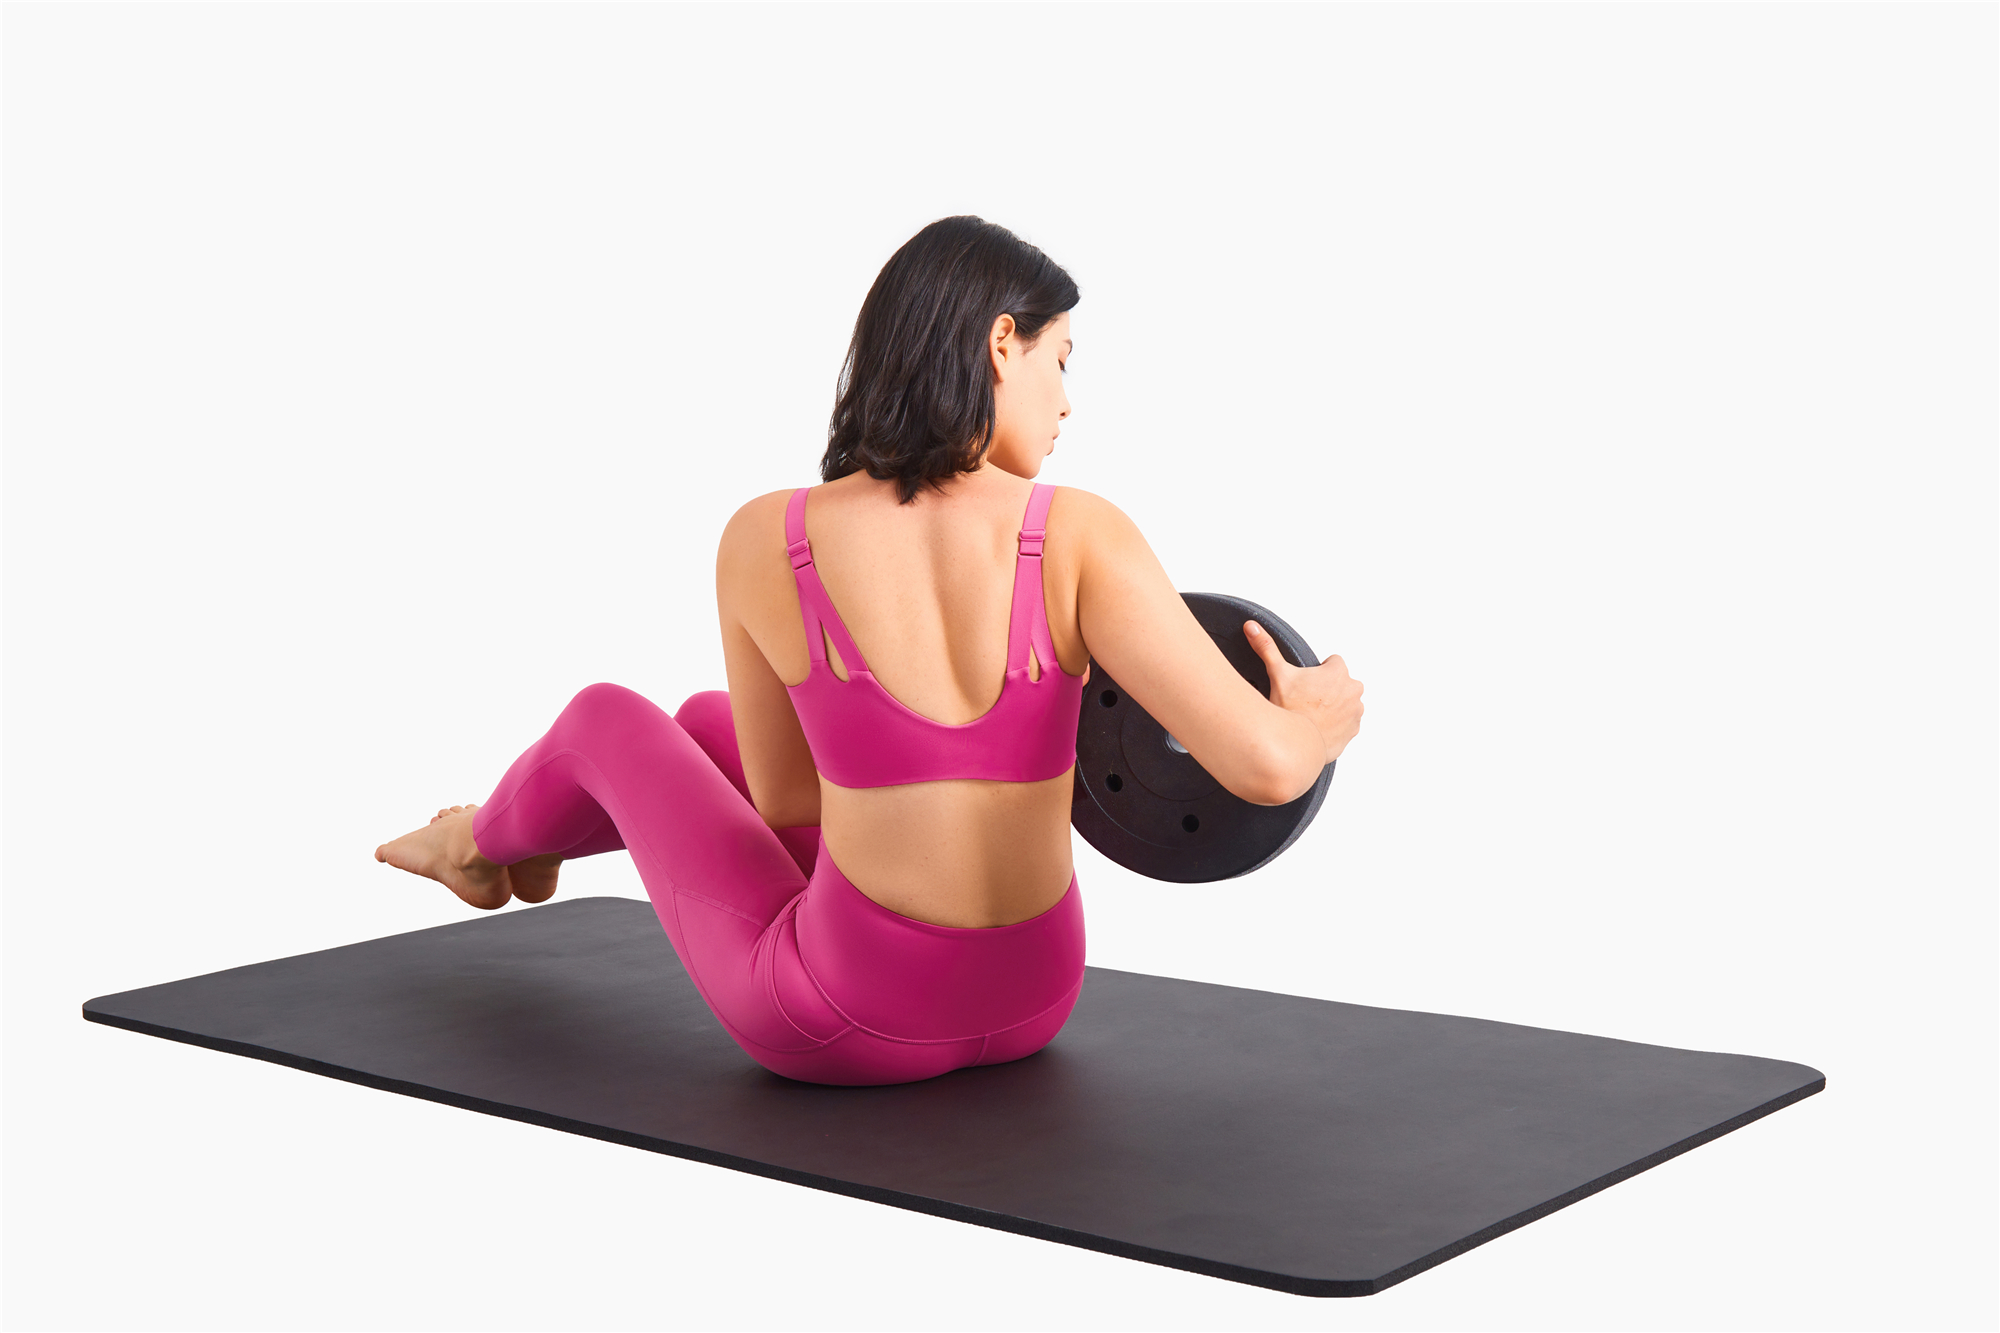 Hergymclothing adjustable pink yoga bra and pink yoga leggins